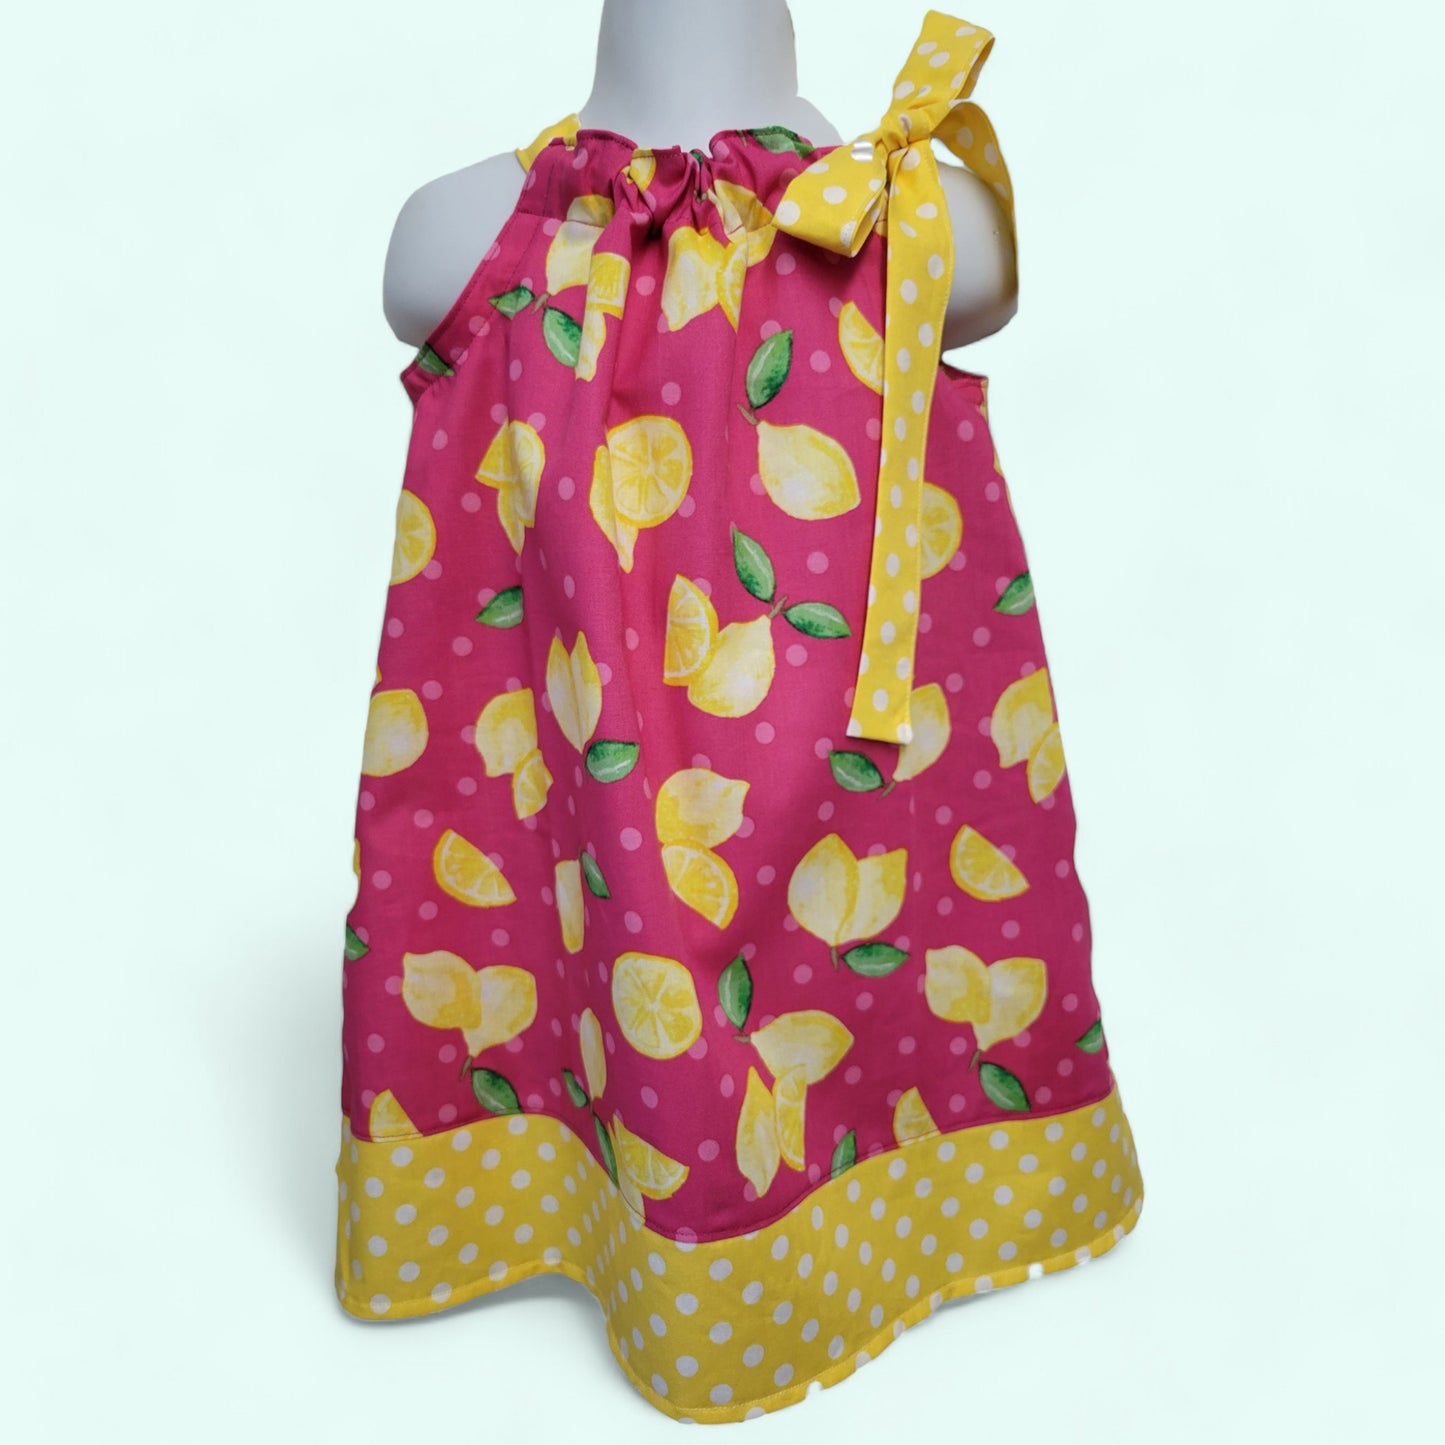 Pillowcase Dress in a Lemon print fabric